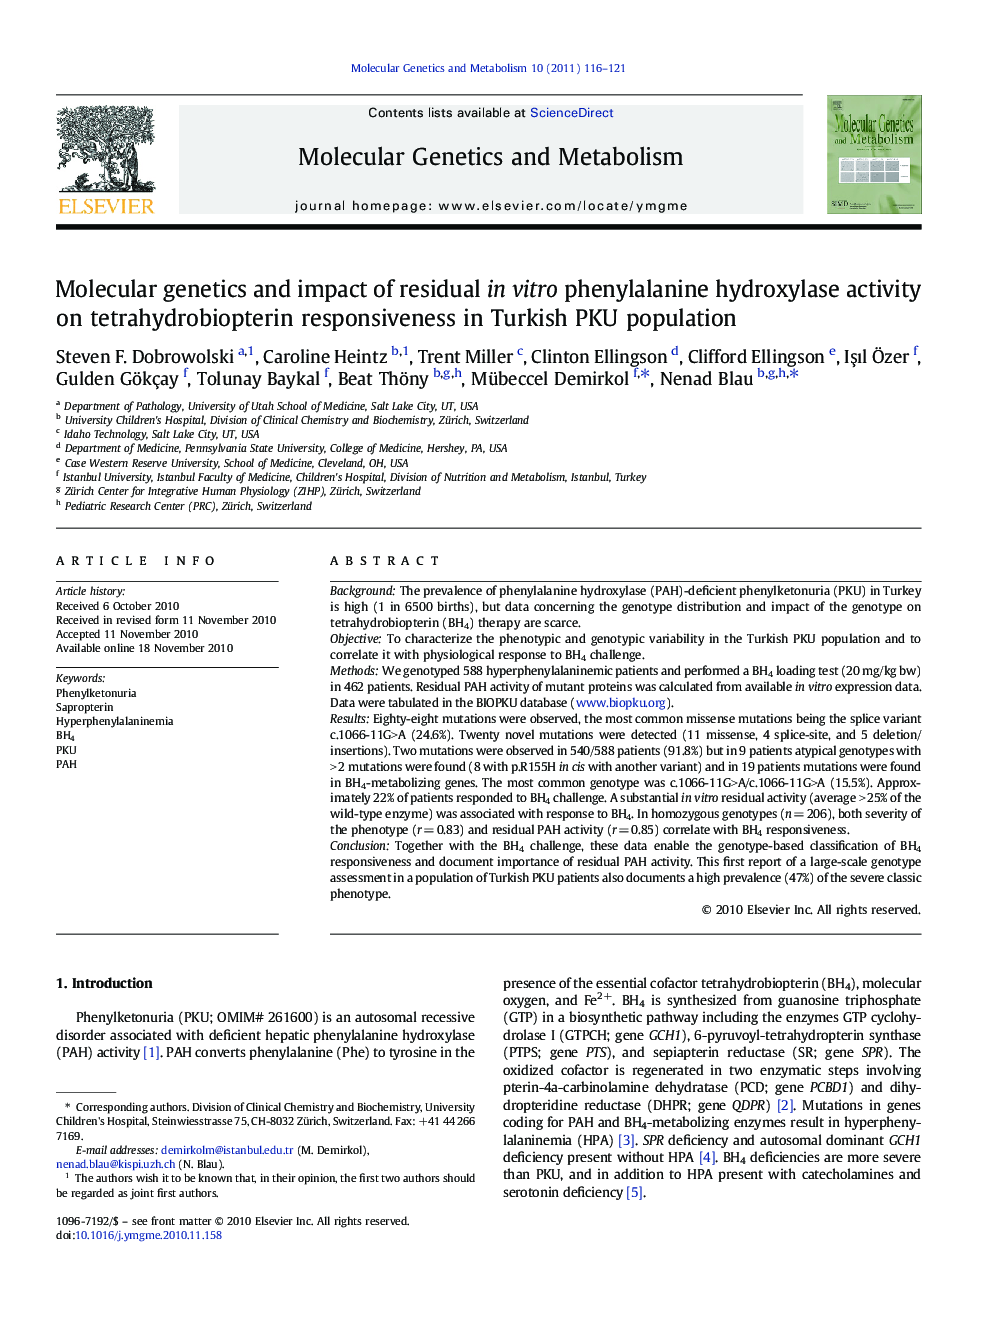 Molecular genetics and impact of residual in vitro phenylalanine hydroxylase activity on tetrahydrobiopterin responsiveness in Turkish PKU population